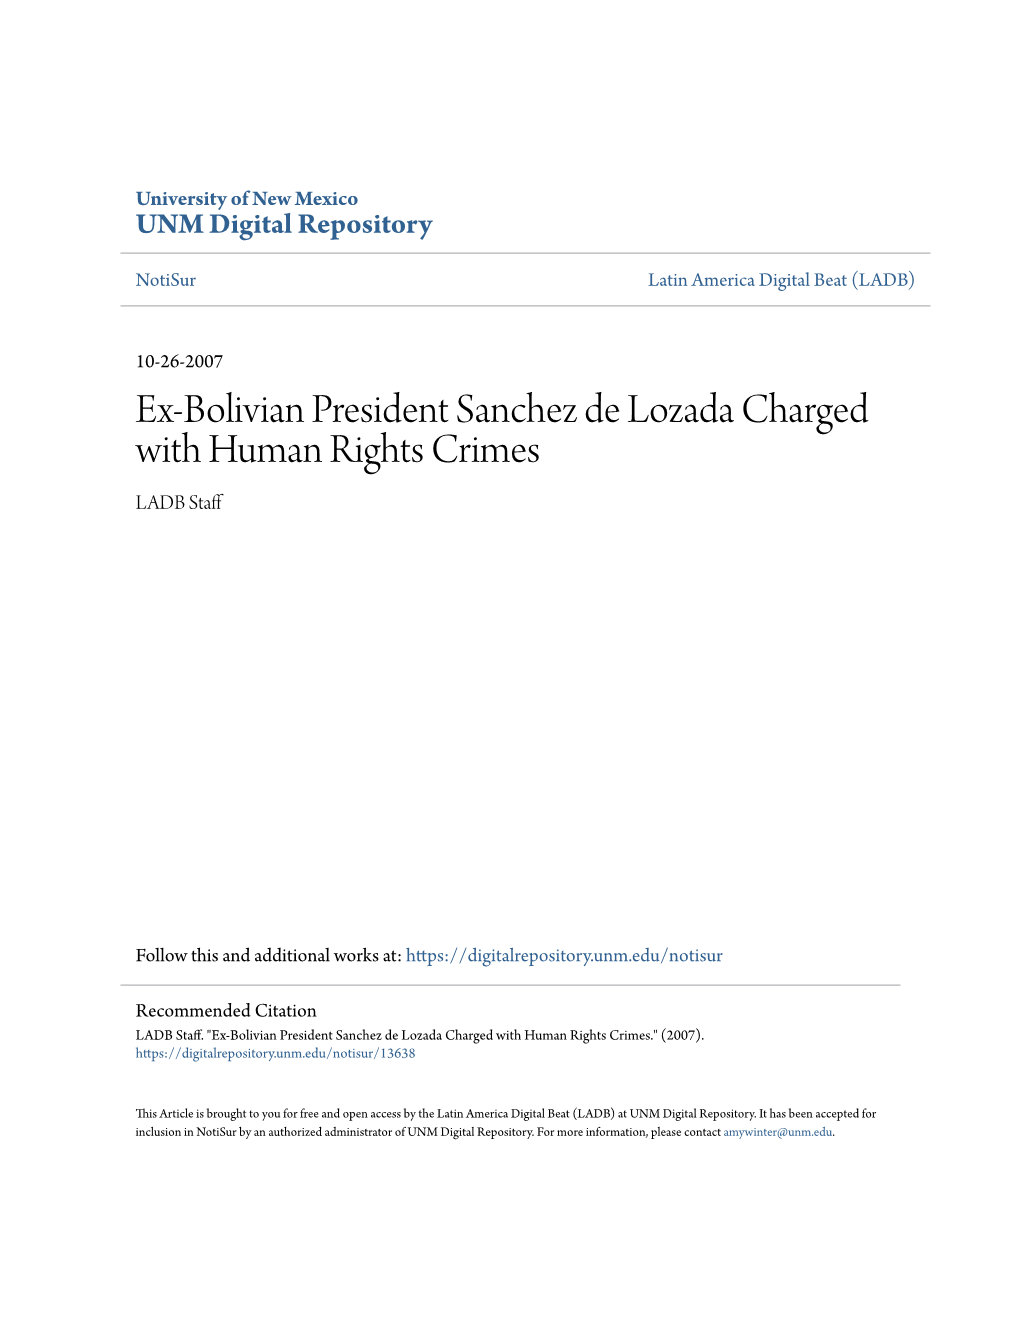 Ex-Bolivian President Sanchez De Lozada Charged with Human Rights Crimes LADB Staff